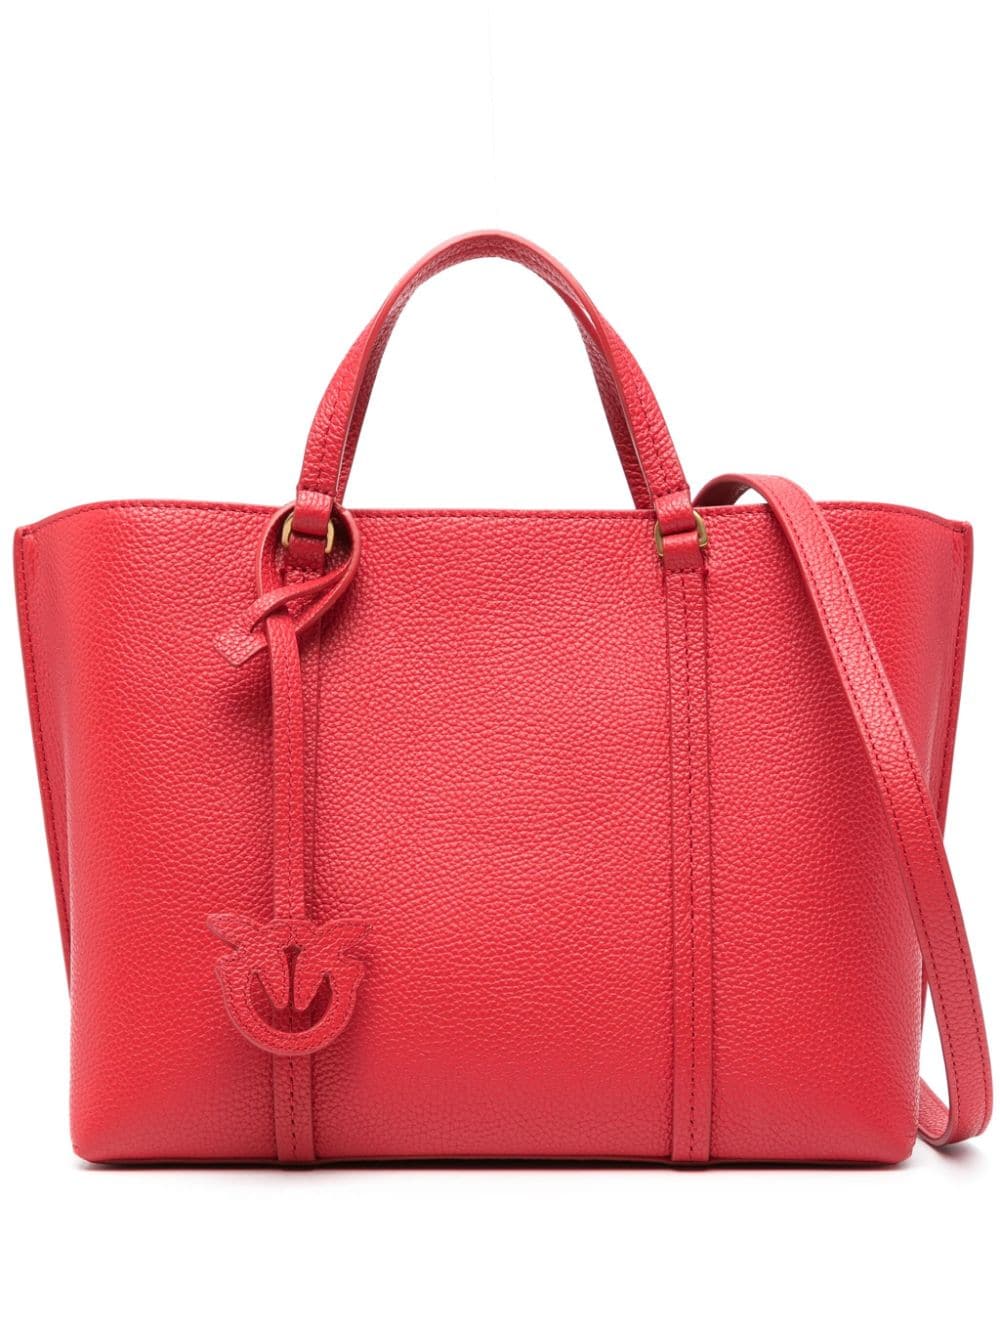 PINKO leather tote bag - Red von PINKO